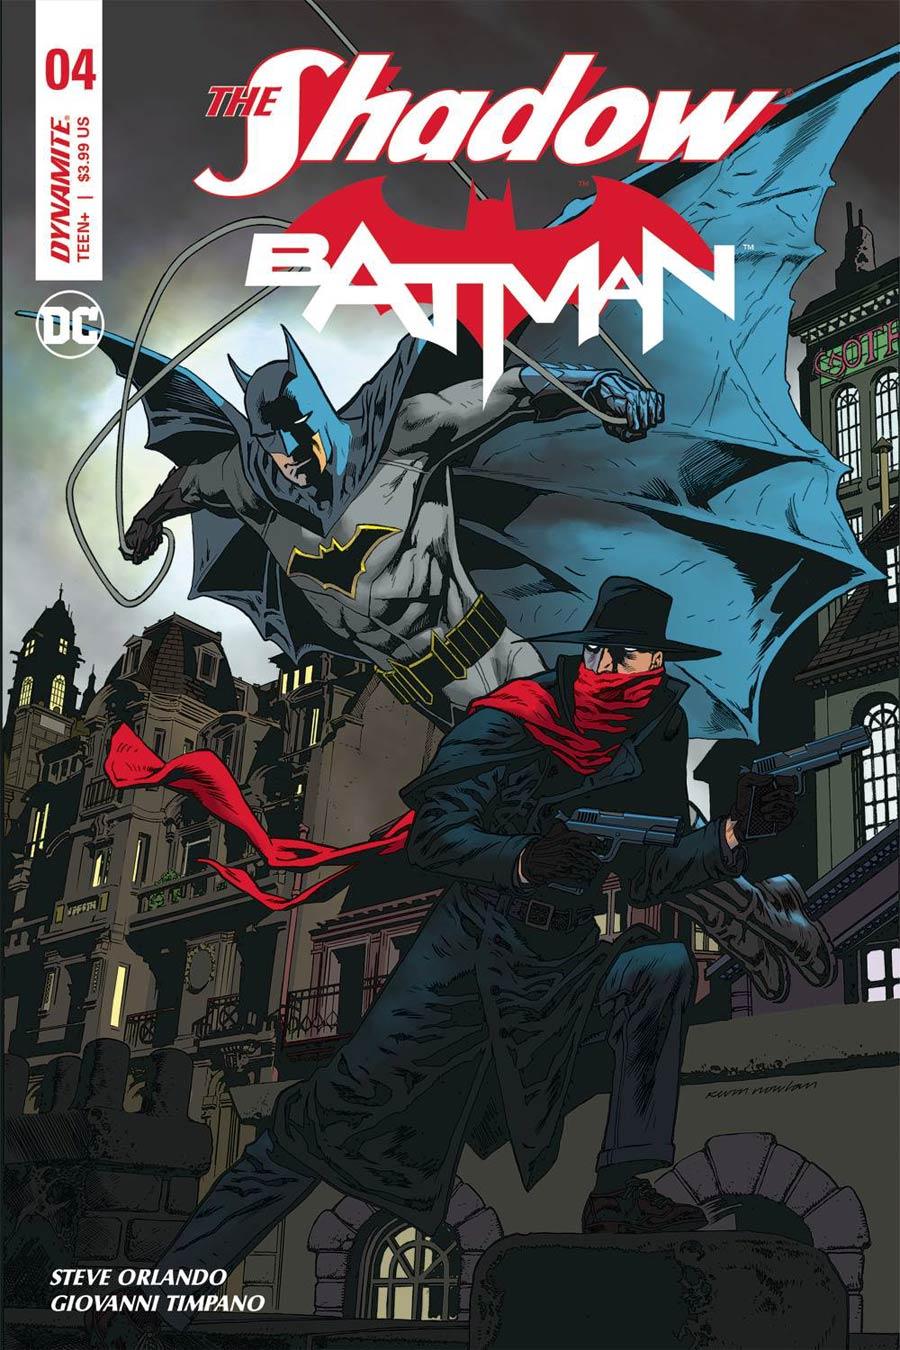 Shadow Batman Vol. 1 #4